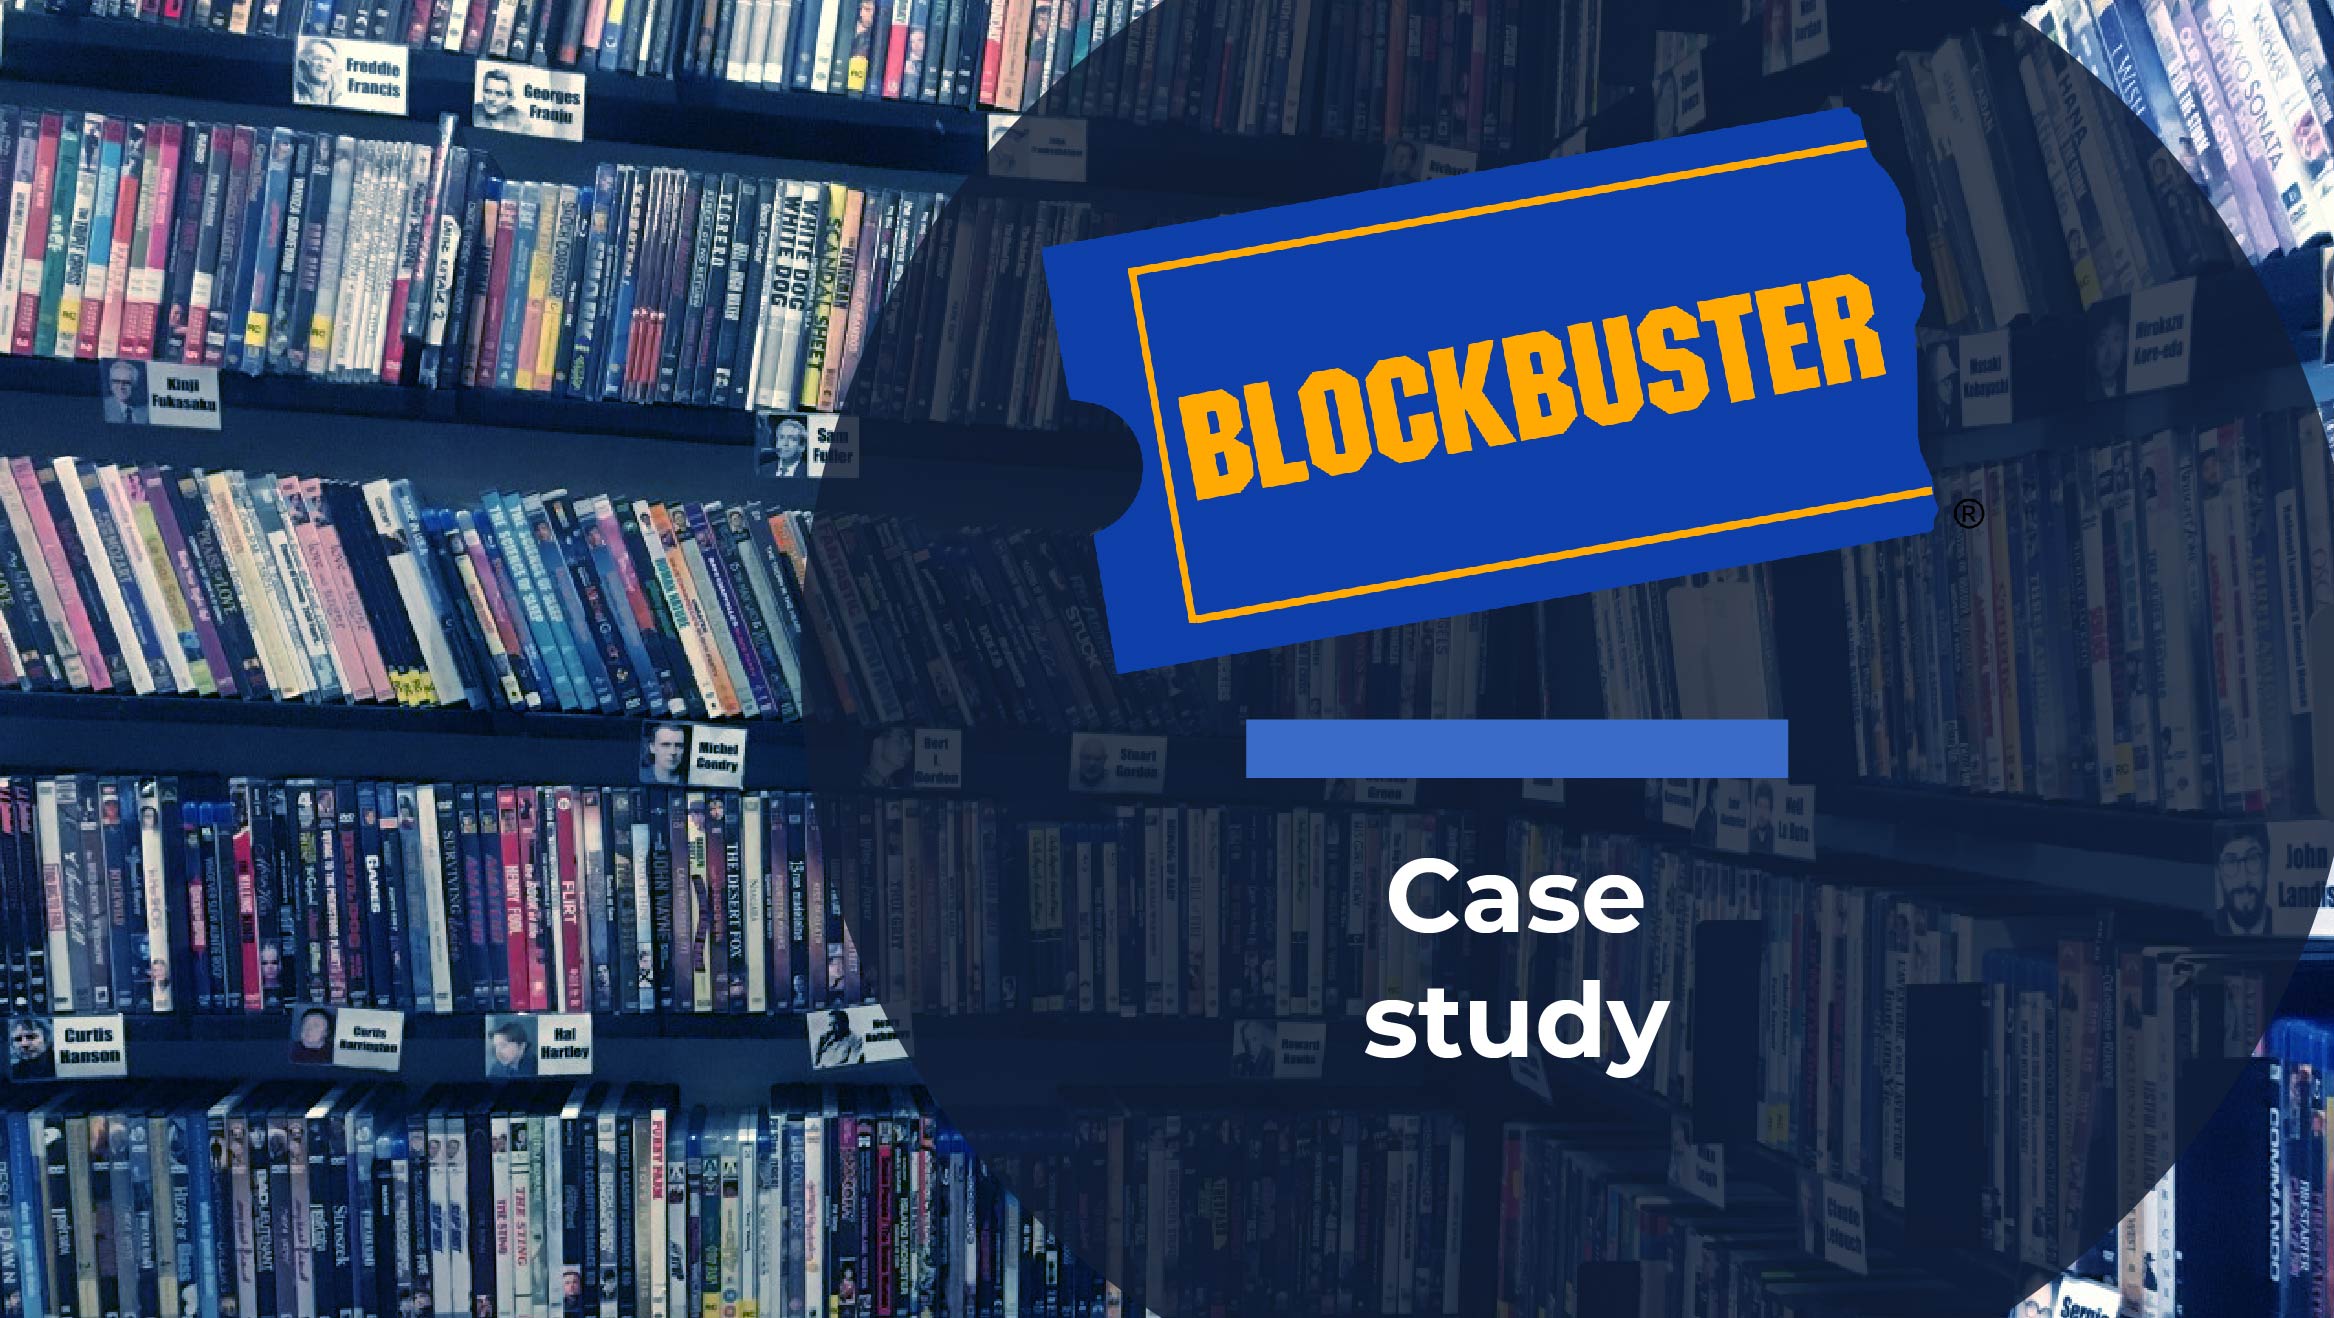 case study on blockbuster company